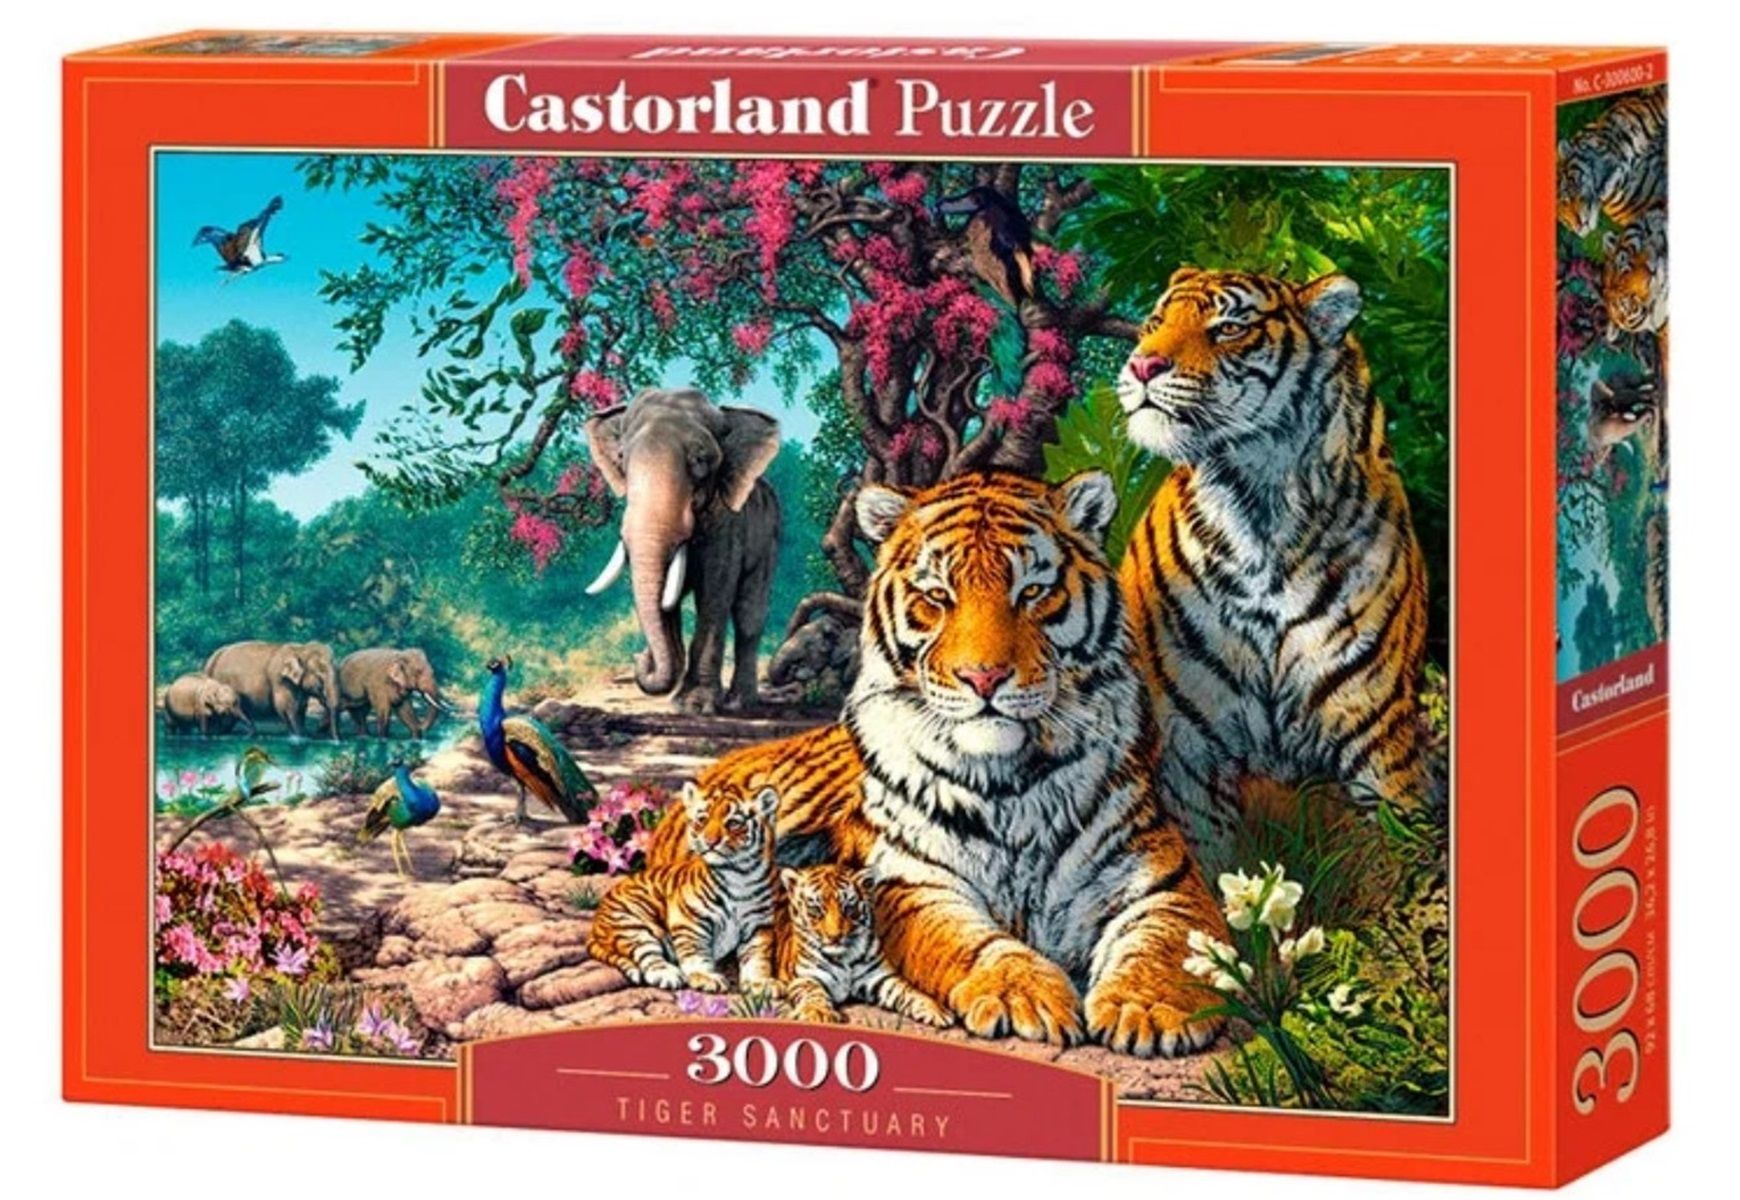 Пазлы 3000 элементов. Пазлы Касторленд 3000. Castorland пазлы тигр. Пазл 3000 деталей. Castorland Puzzle 3000 леопарды.